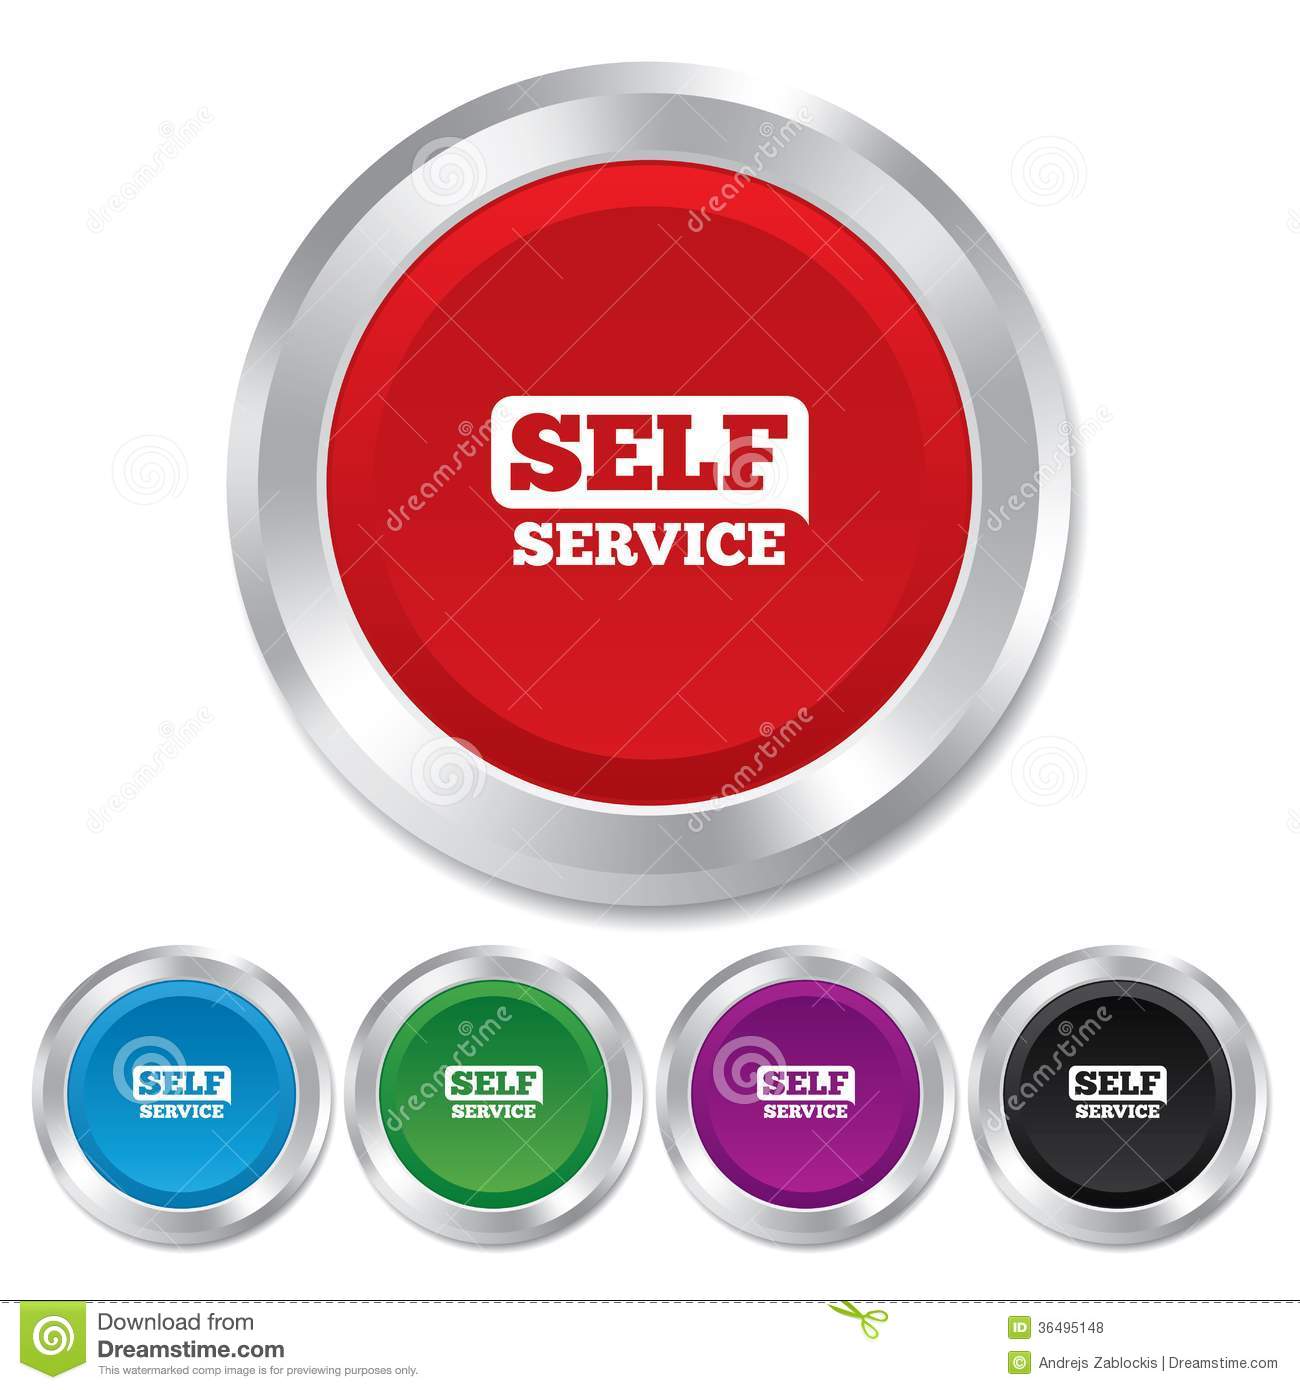 Self Service Icons Free